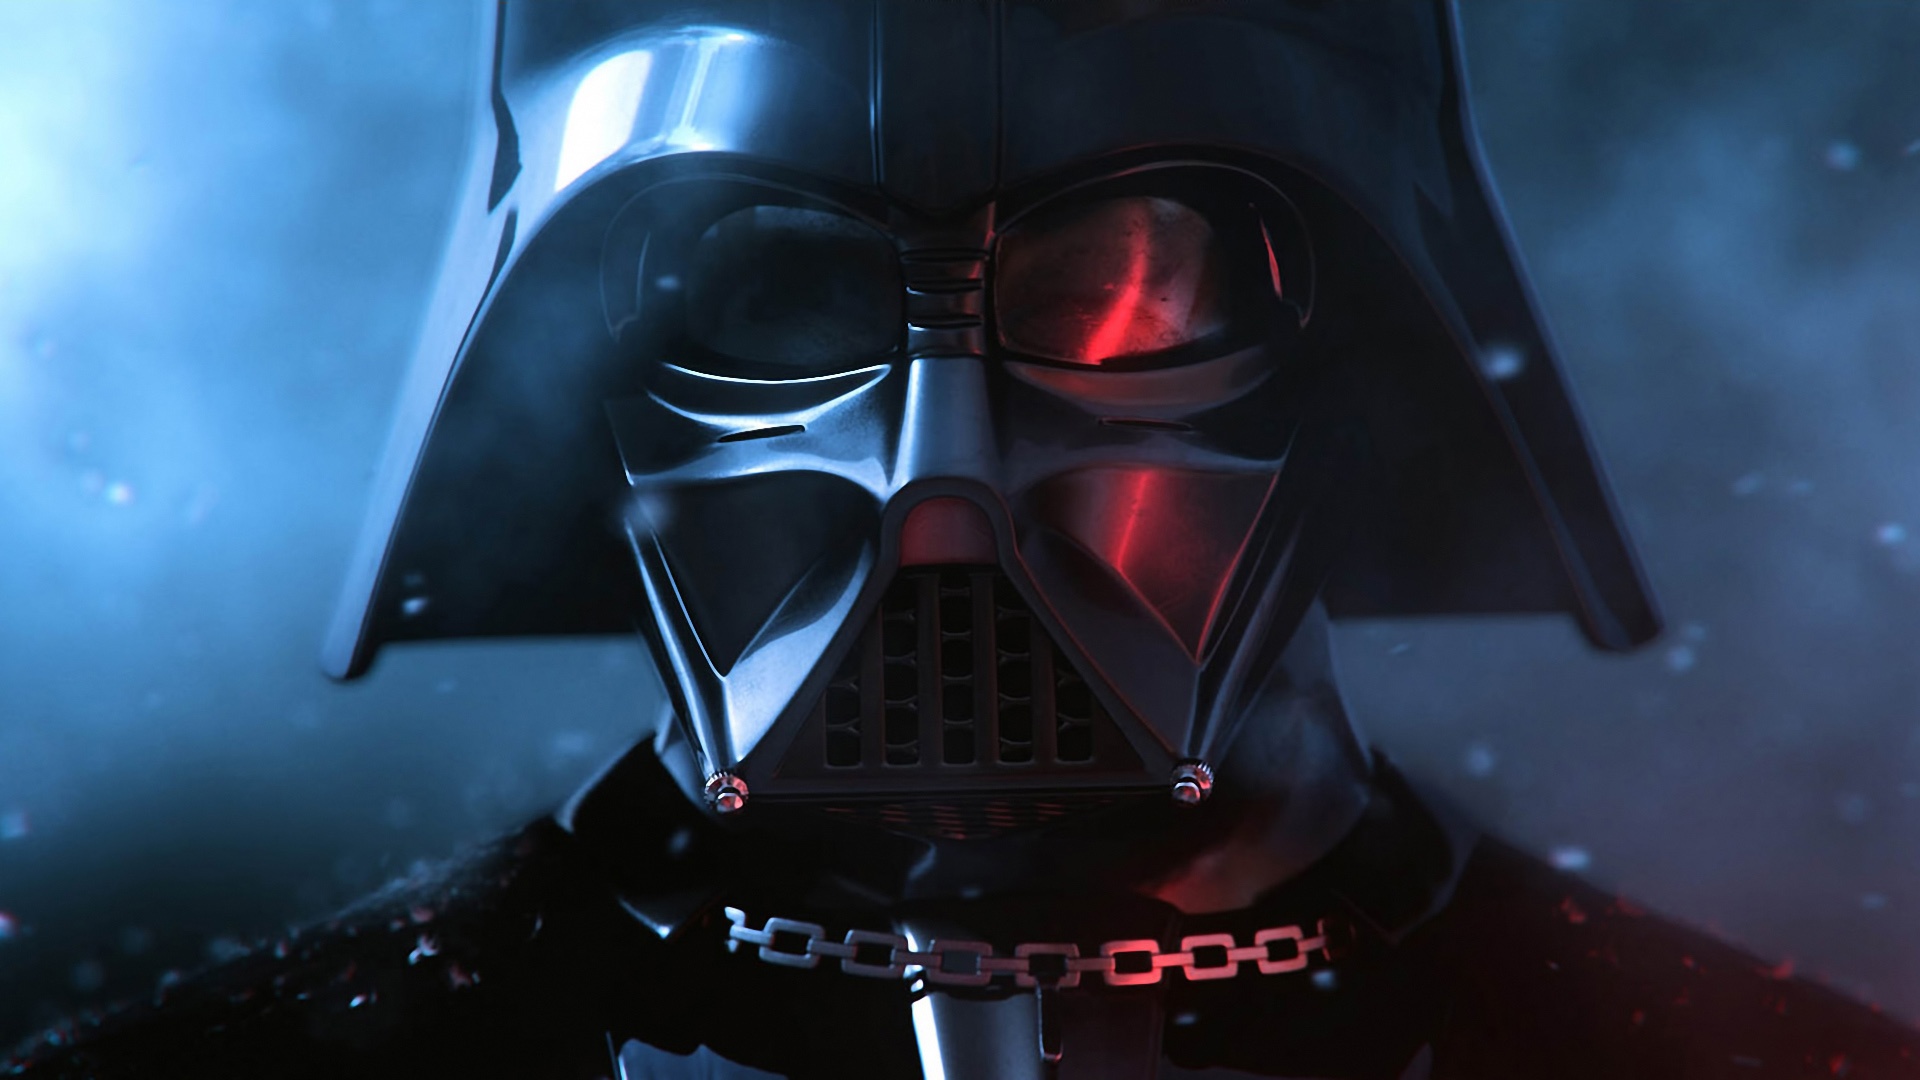 Wallpaper Star Wars, Darth Vader 1920x1080 Full HD 2K Picture, Image